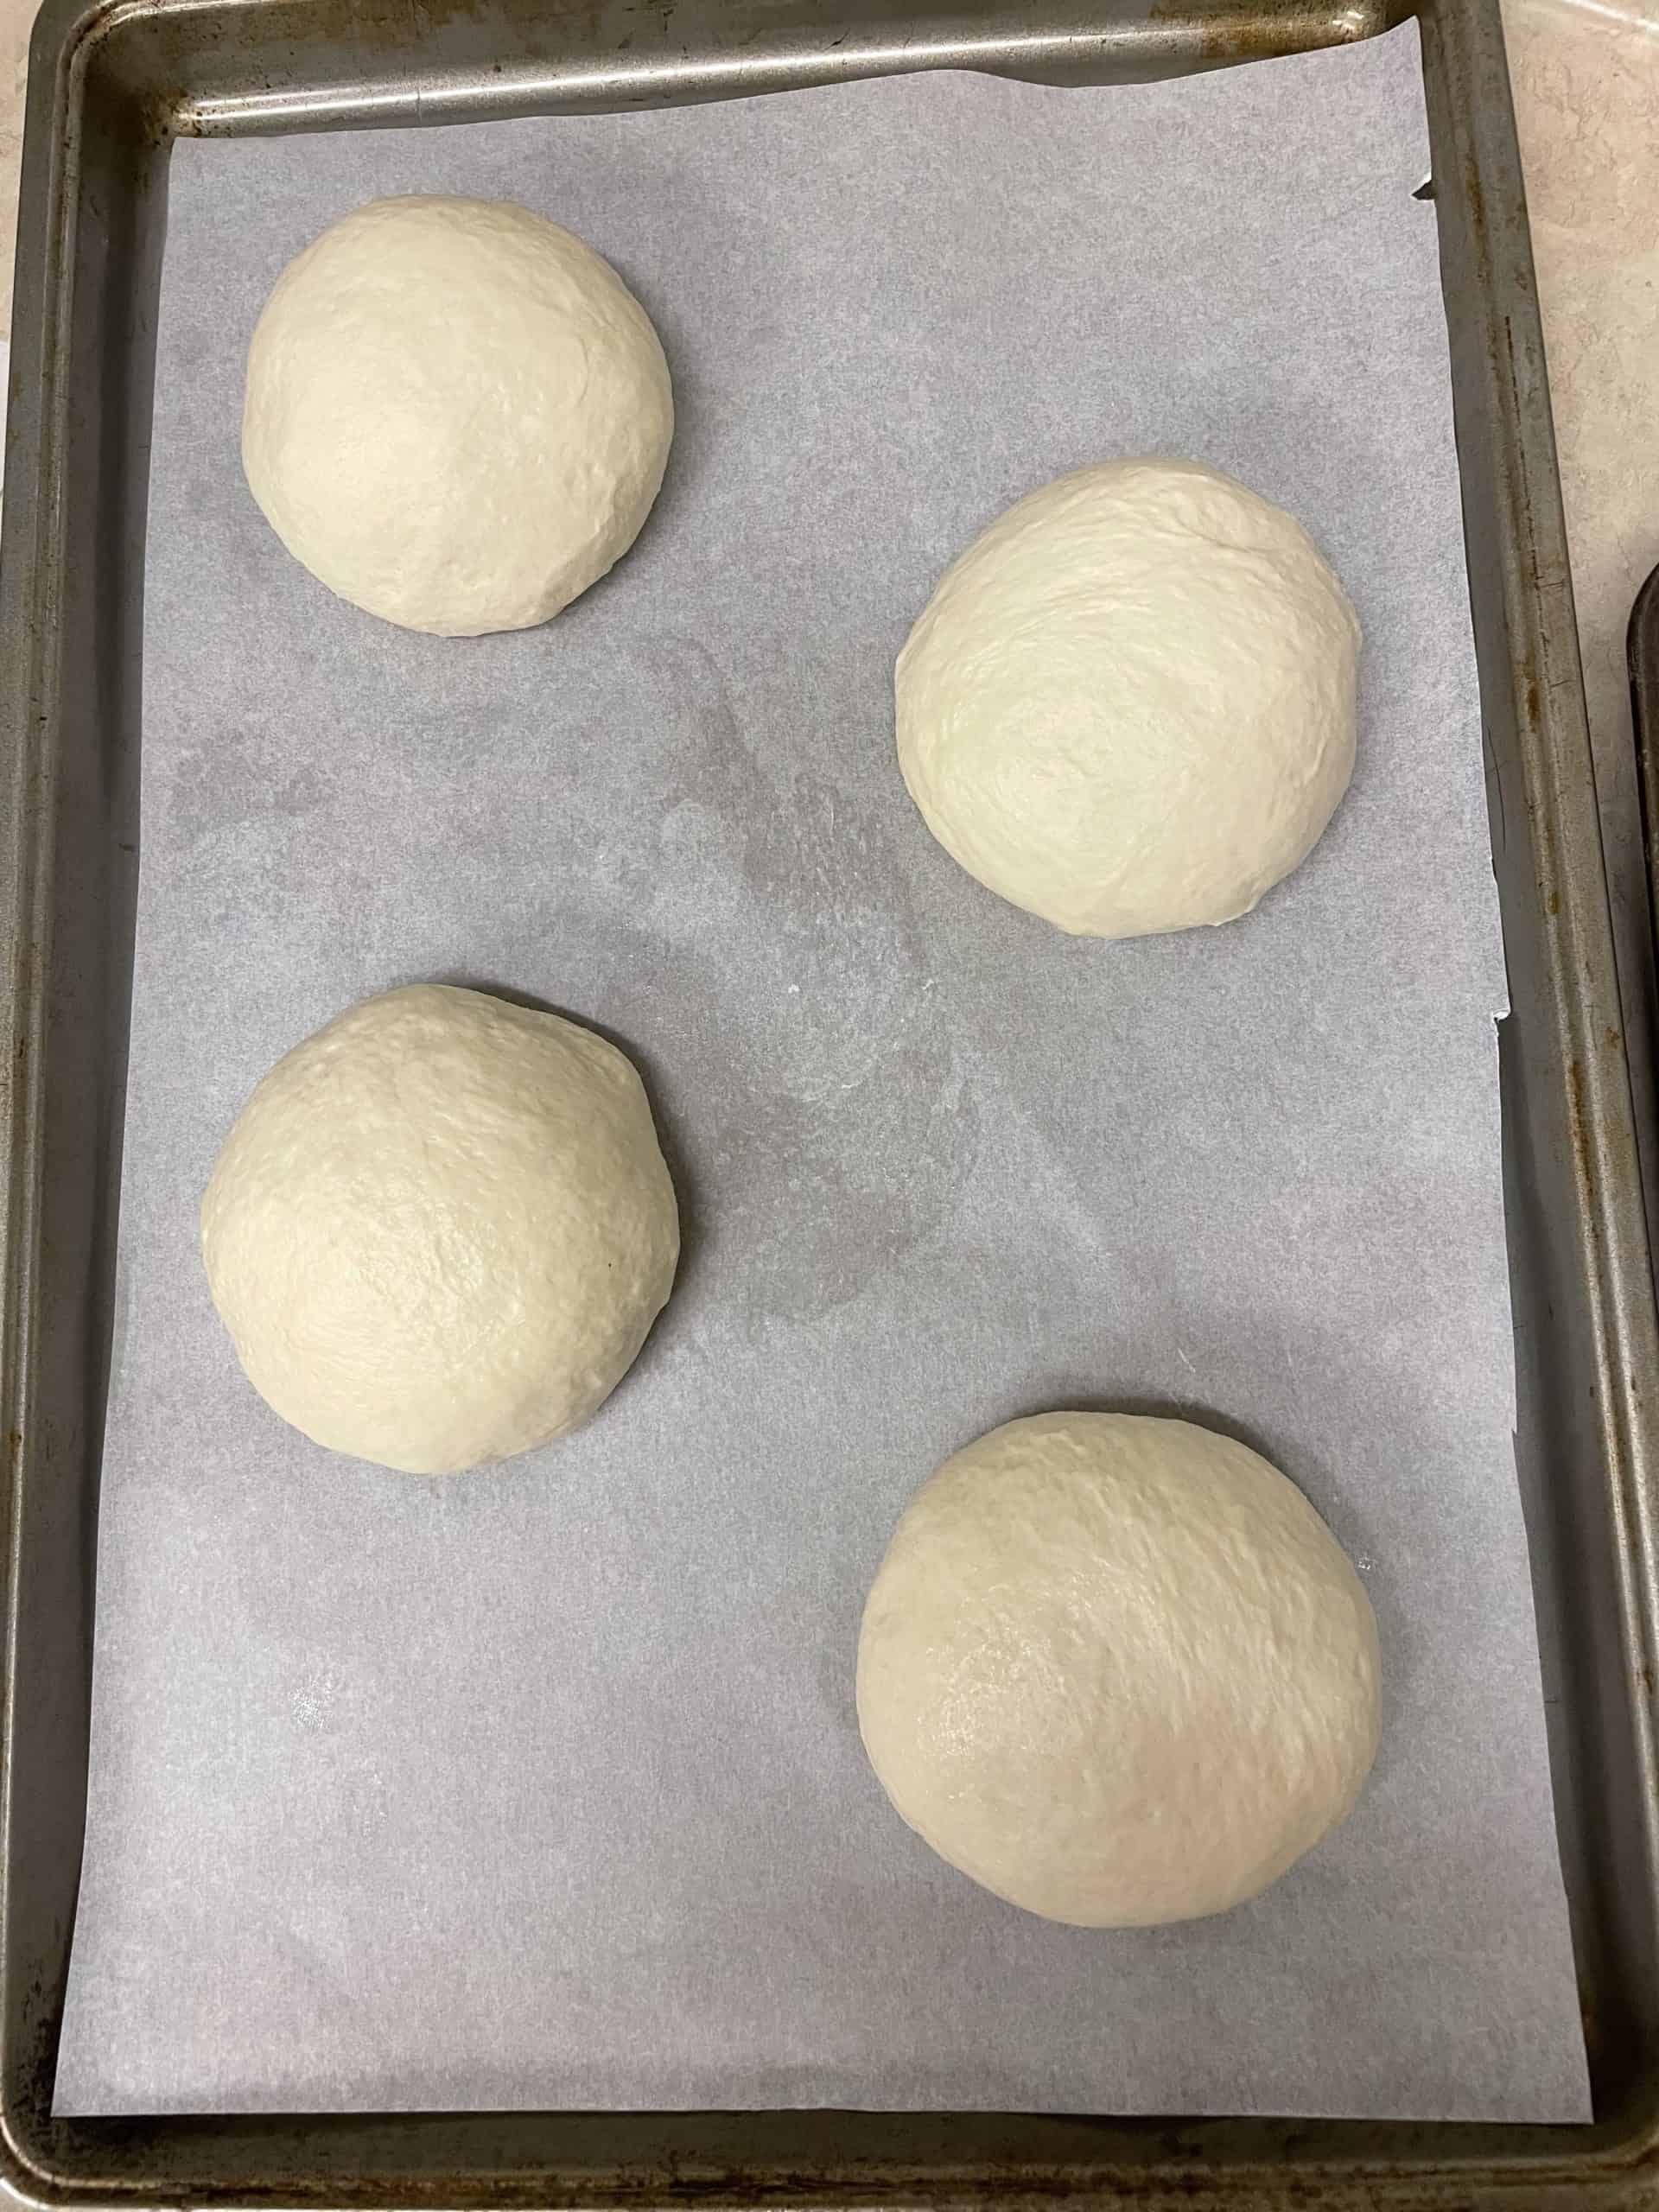 Four Dough Balls on a Parchment Lined Baking Sheet.